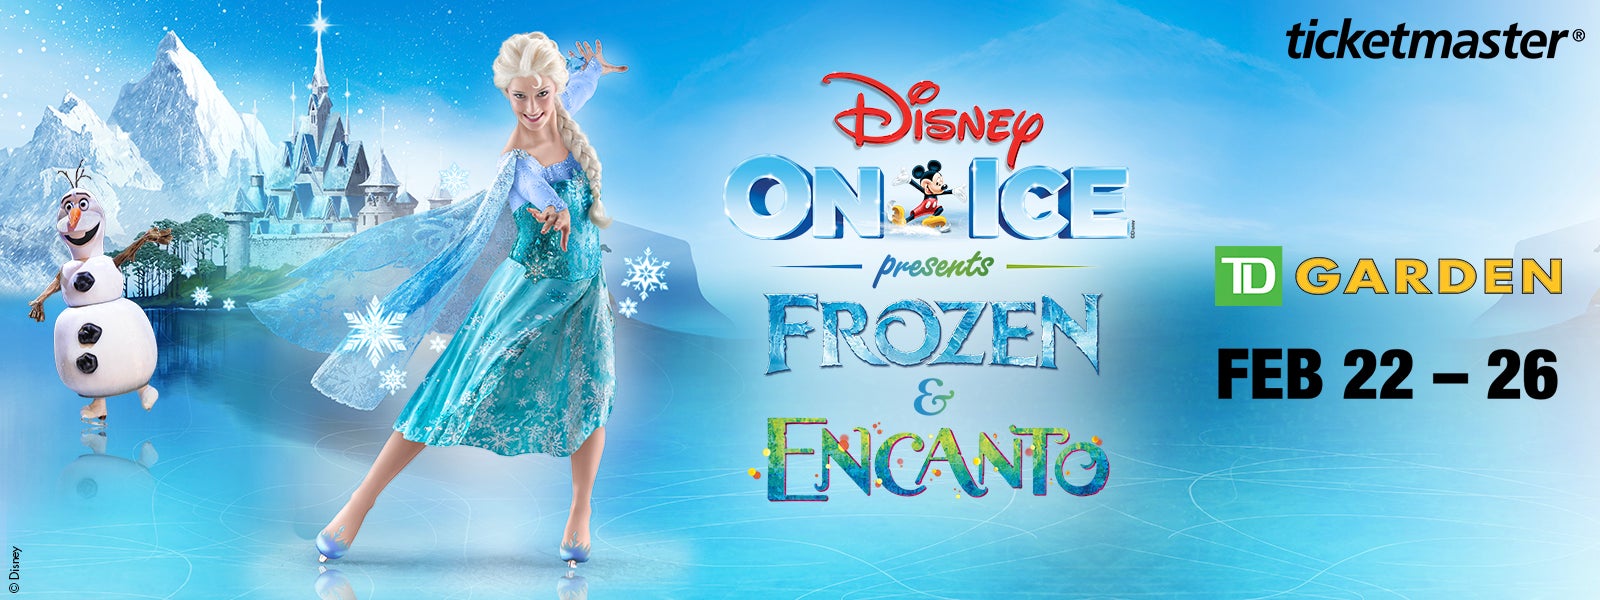 Disney on Ice presents Frozen and Encanto